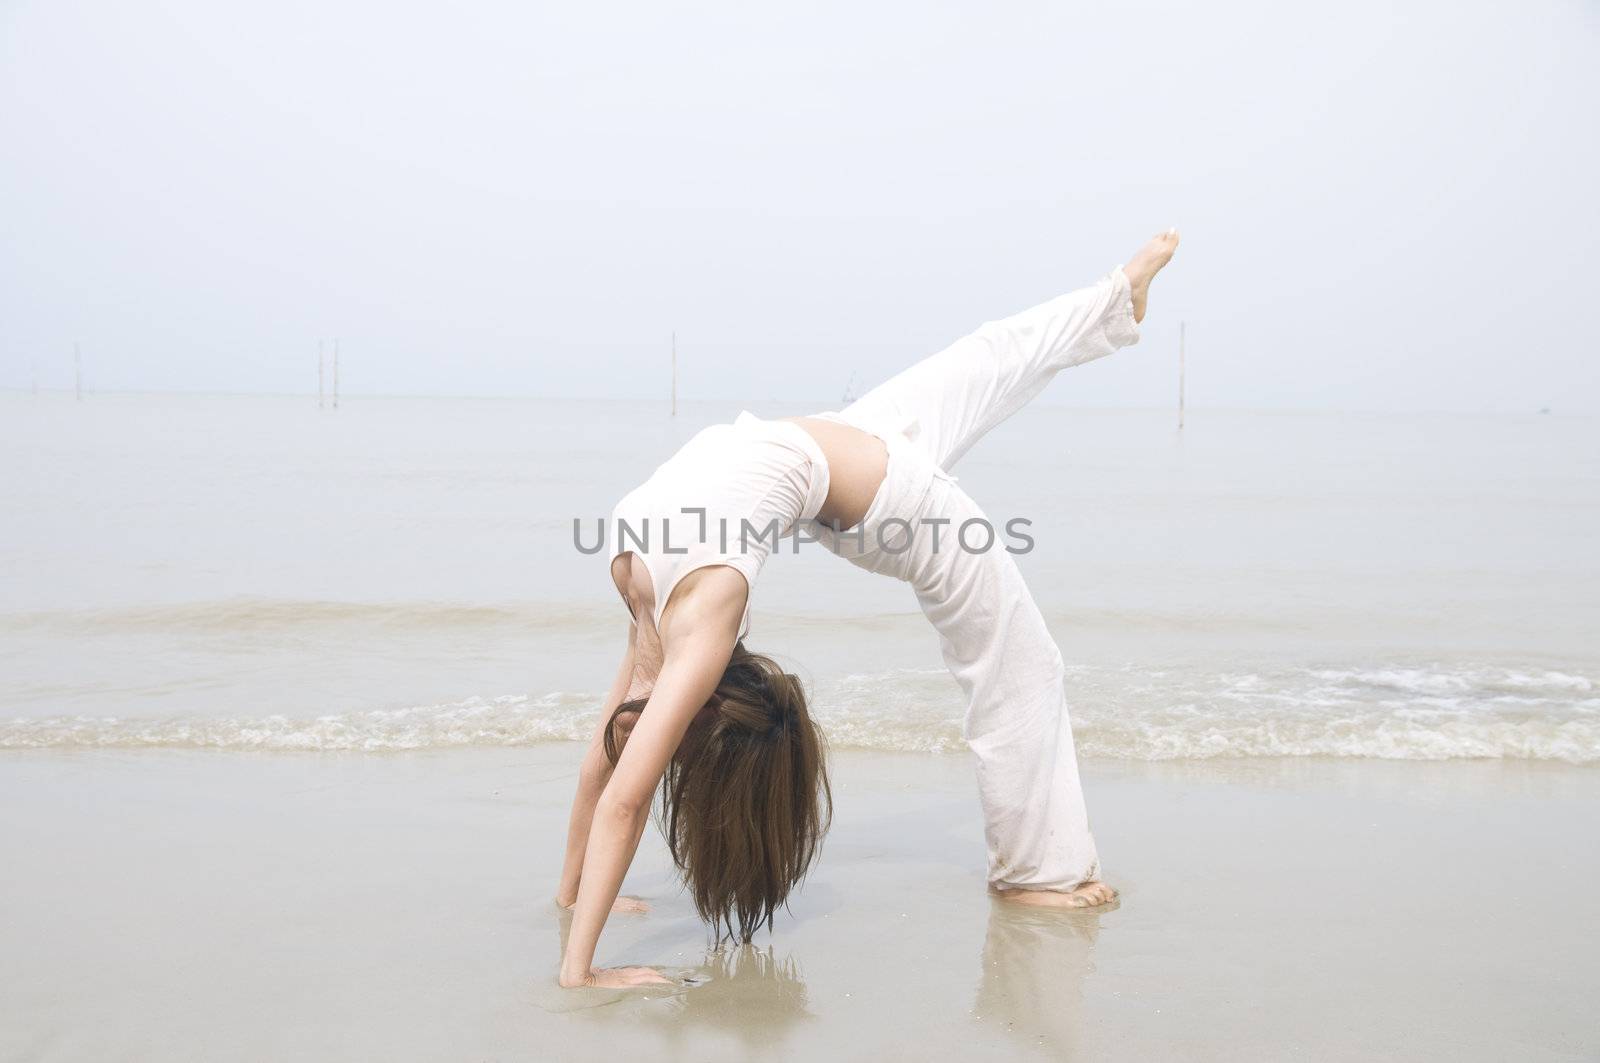 asian girl performing yoga on a beach